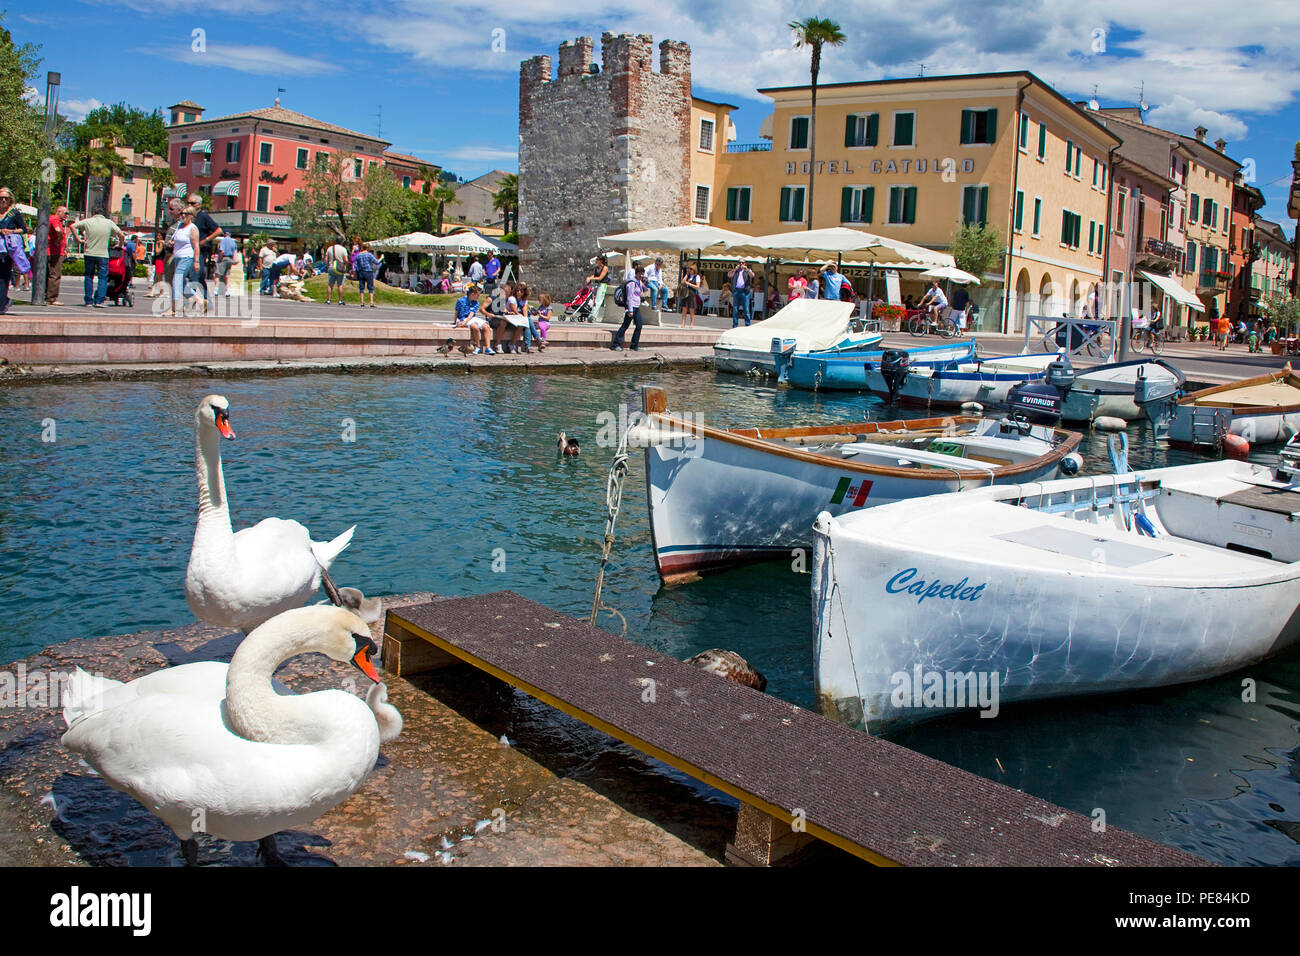 Fishing boats at the harbour, lake promenade, Bardolino, province Verona, Lake Garda, Lombardy, Italy Stock Photo